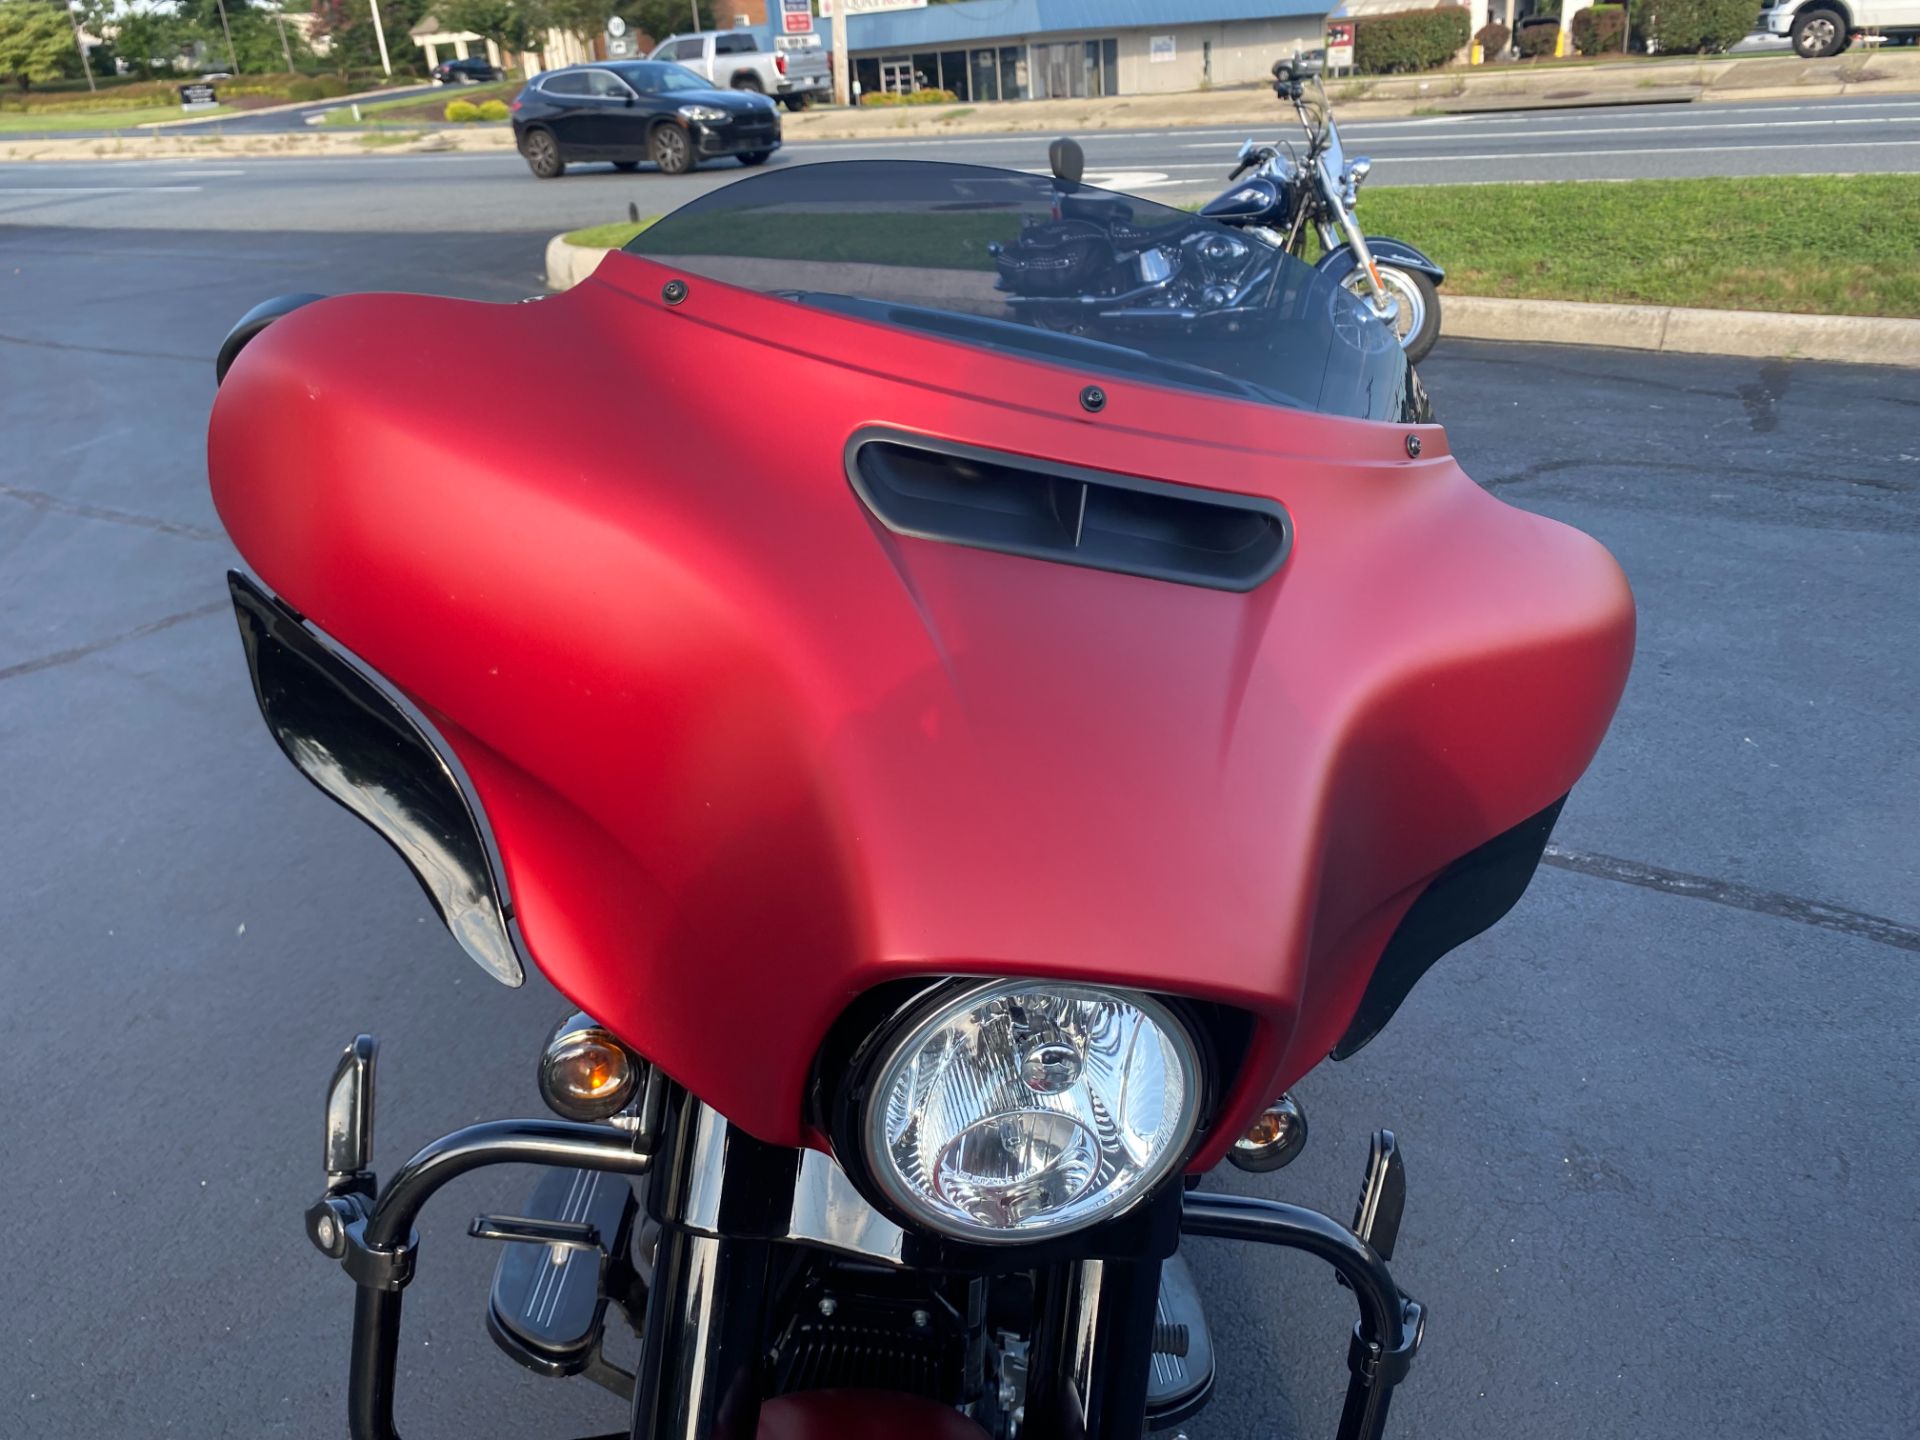 2019 Harley-Davidson Street Glide® Special in Lynchburg, Virginia - Photo 12